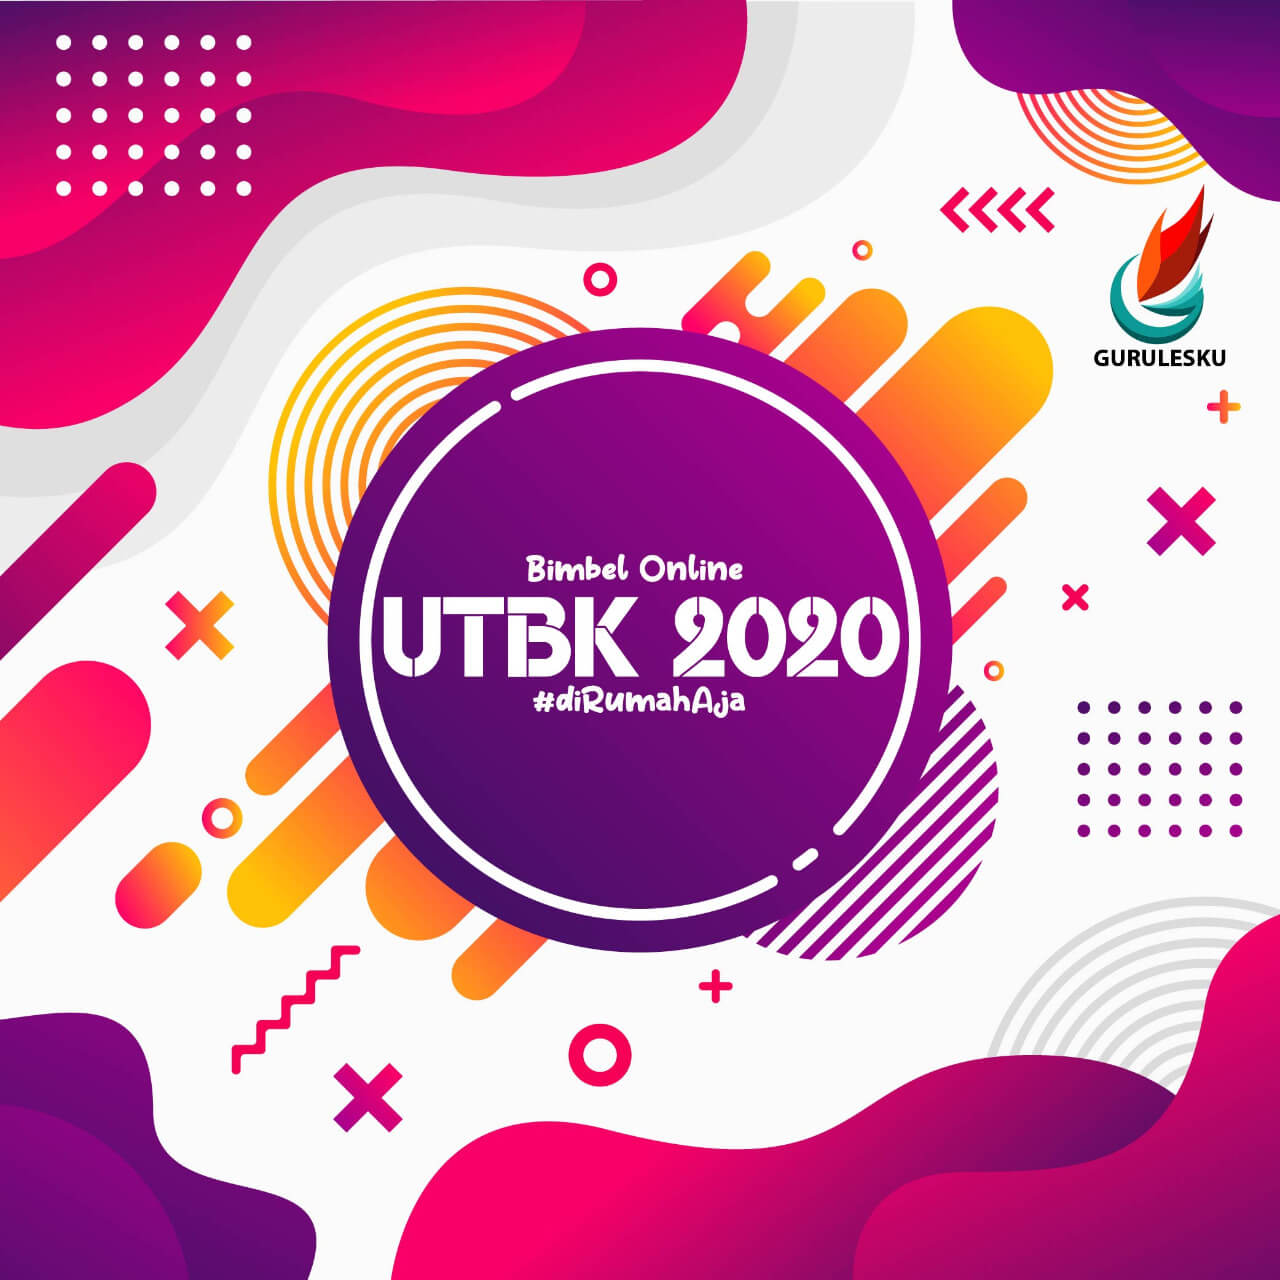 Bimbel Online UTBK Surabaya 2020